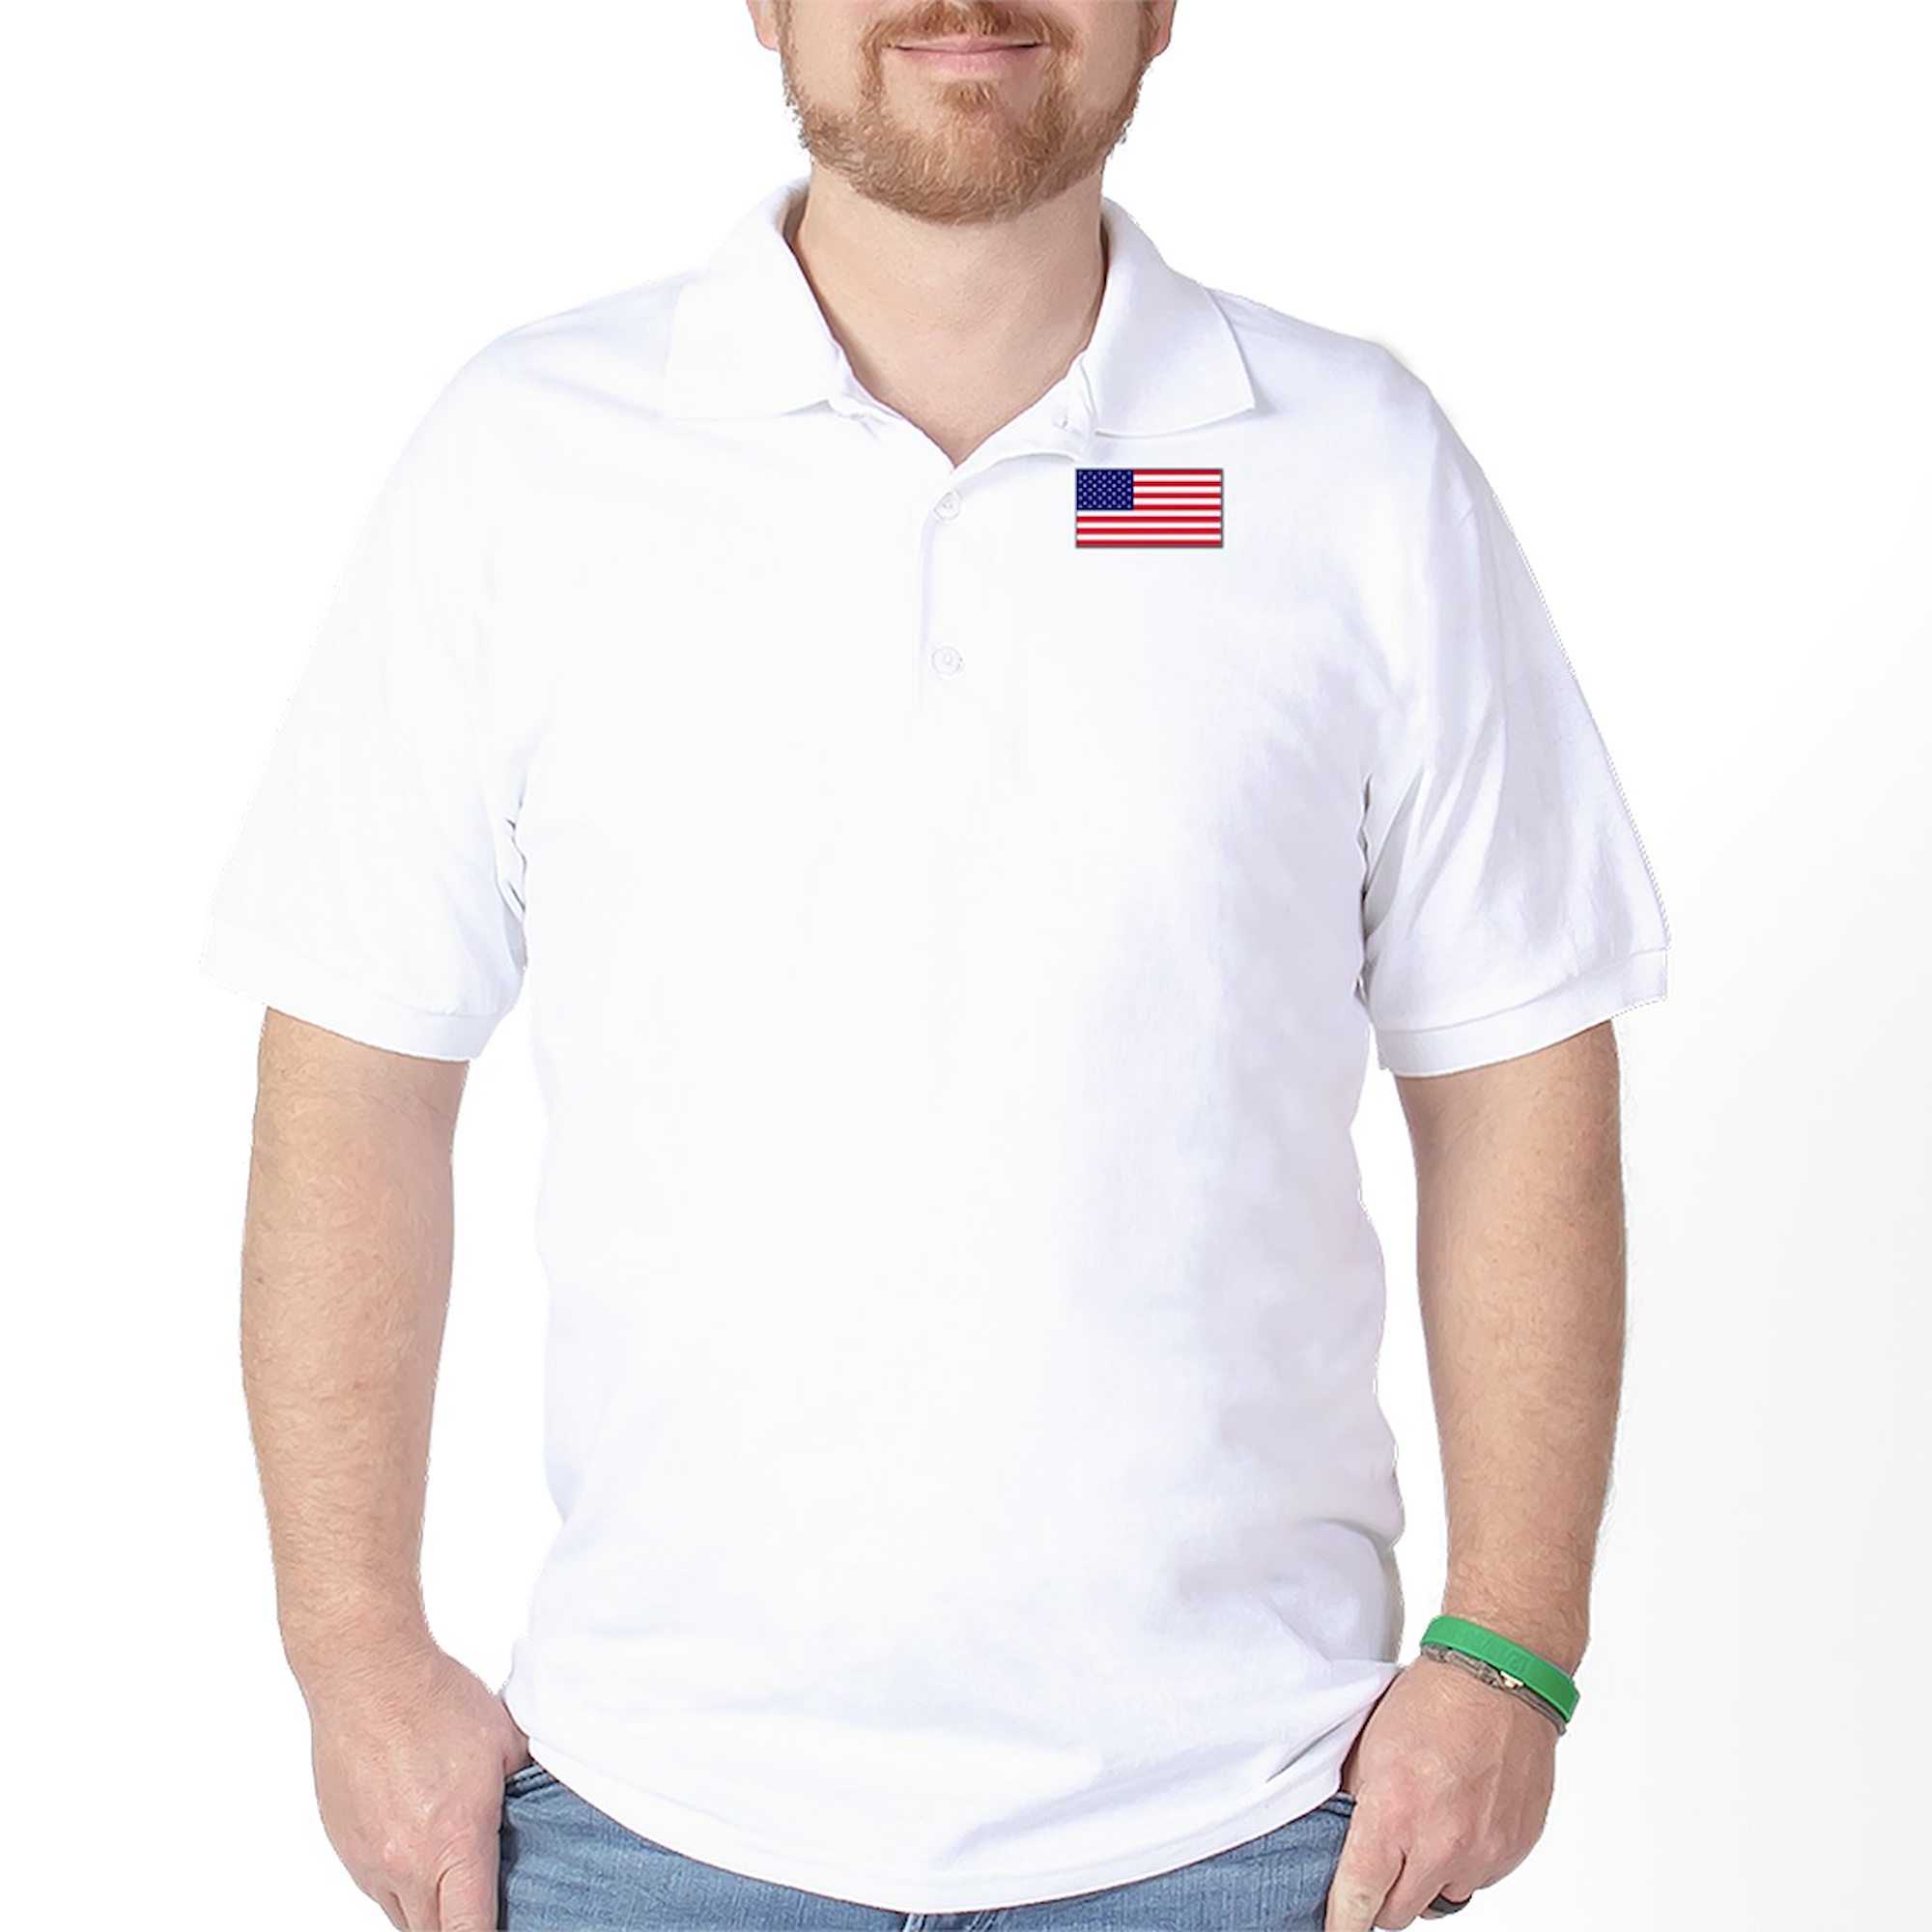 CafePress - American Flag Golf Shirt - Golf Shirt, Pique Knit Golf Polo - image 1 of 4